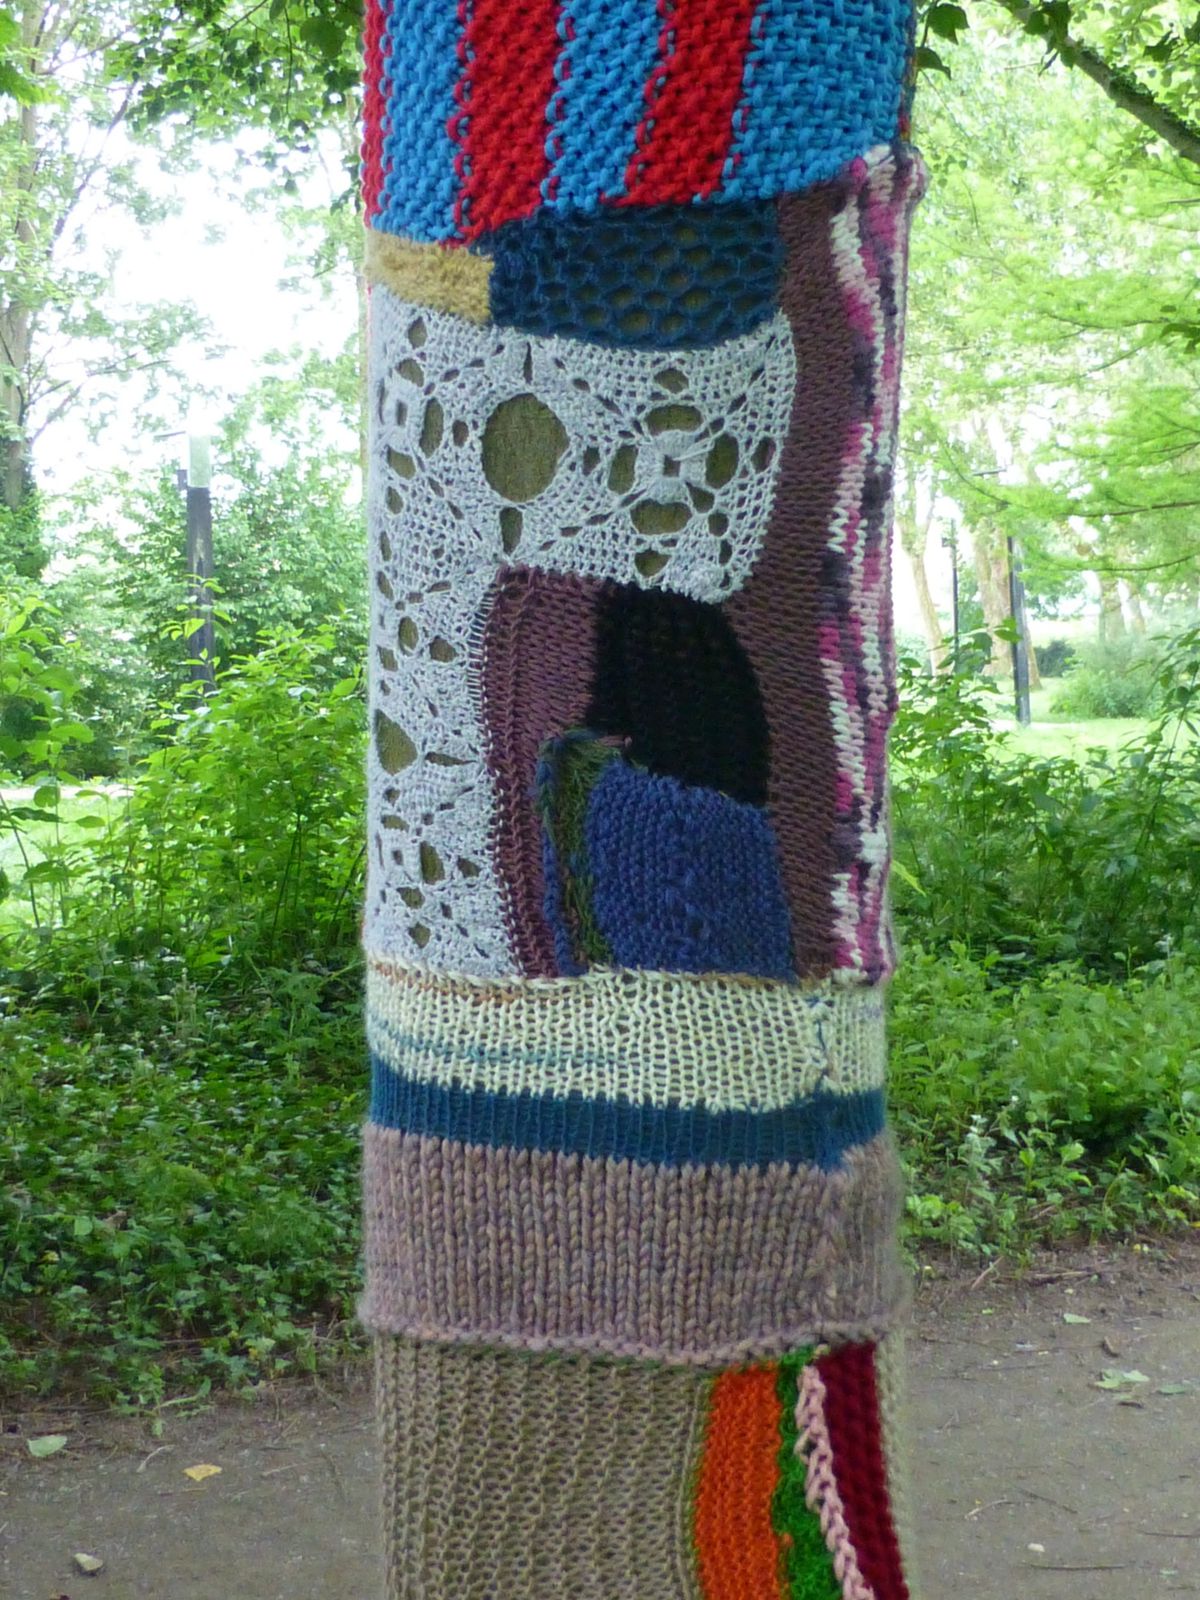 Tree art or yarn bombing 